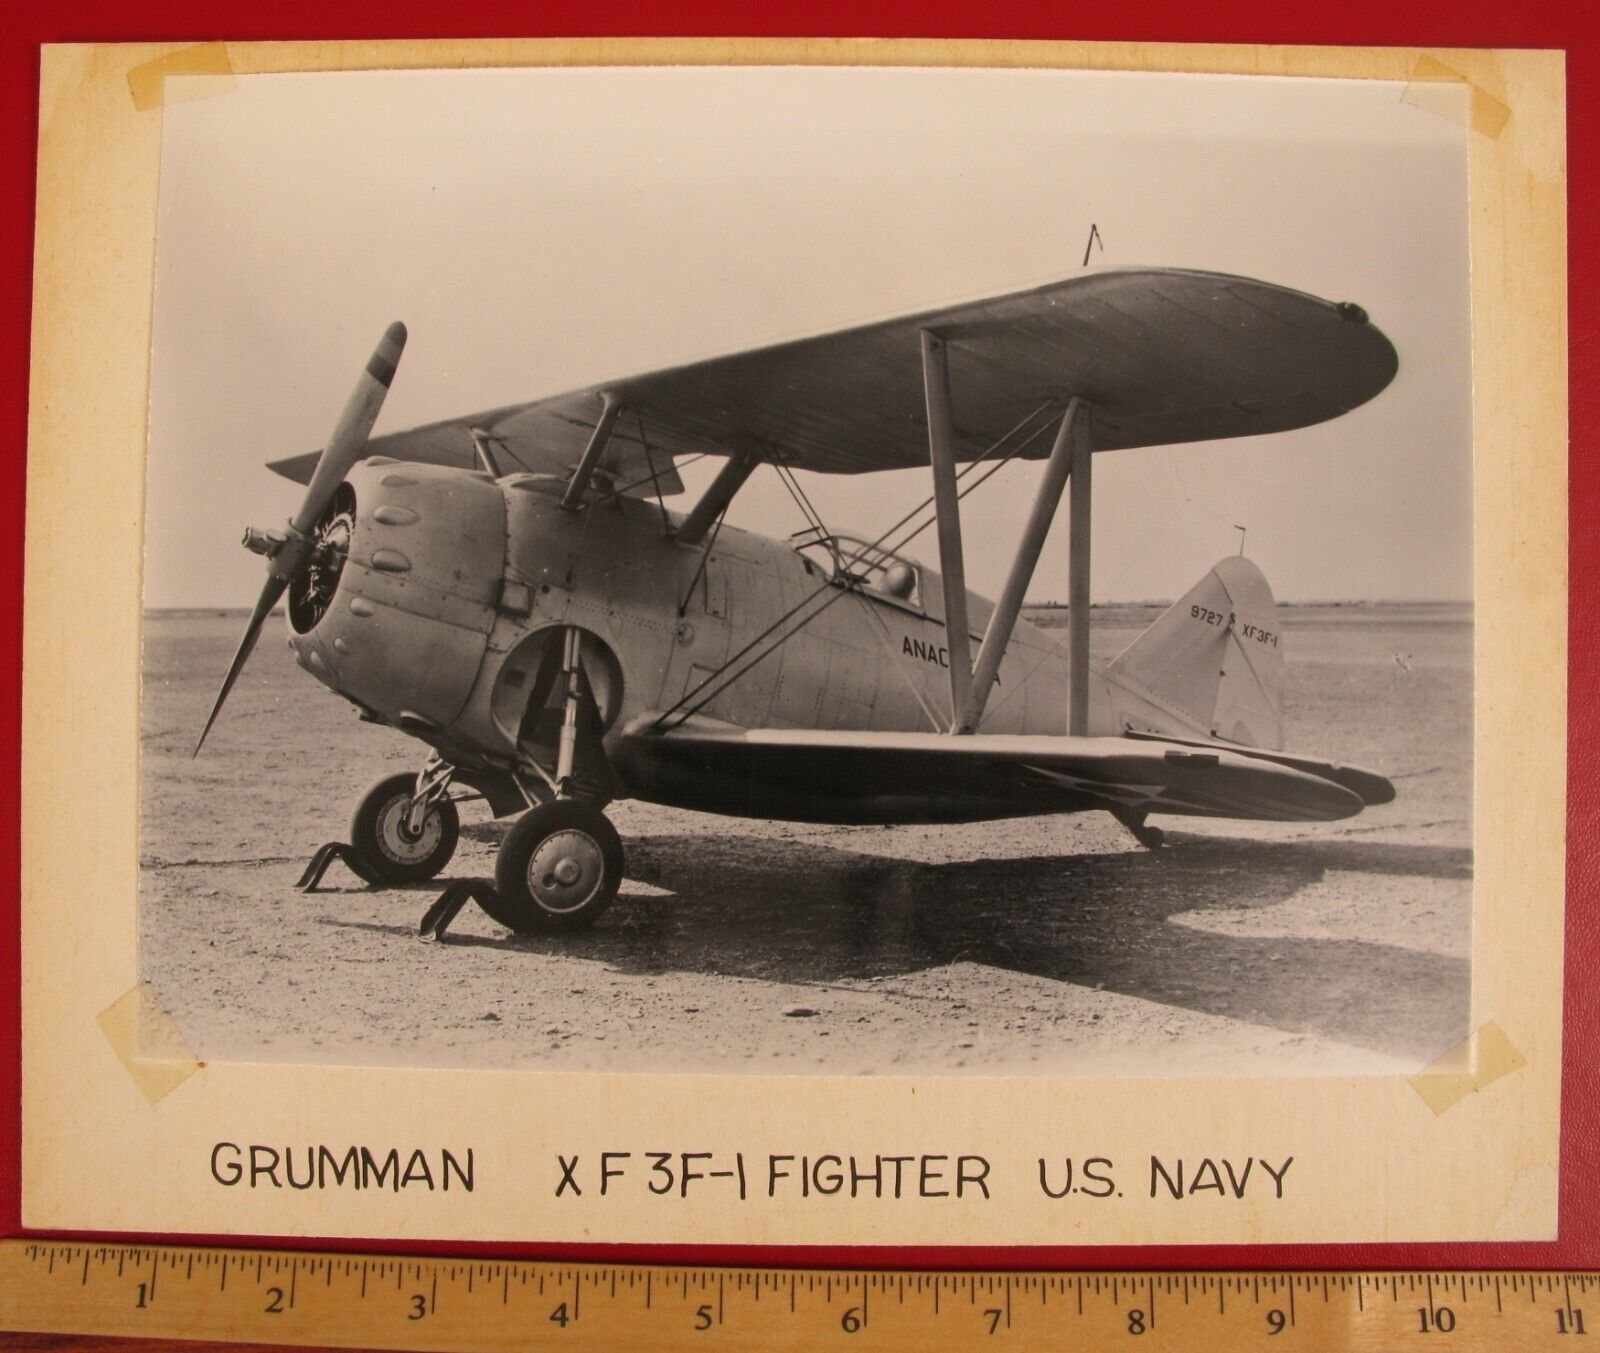 VINTAGE PHOTOGRAPH GRUMMAN XF3F-1 FIGHTER US NAVY MILITARY AIRPLANE BIPLANE 